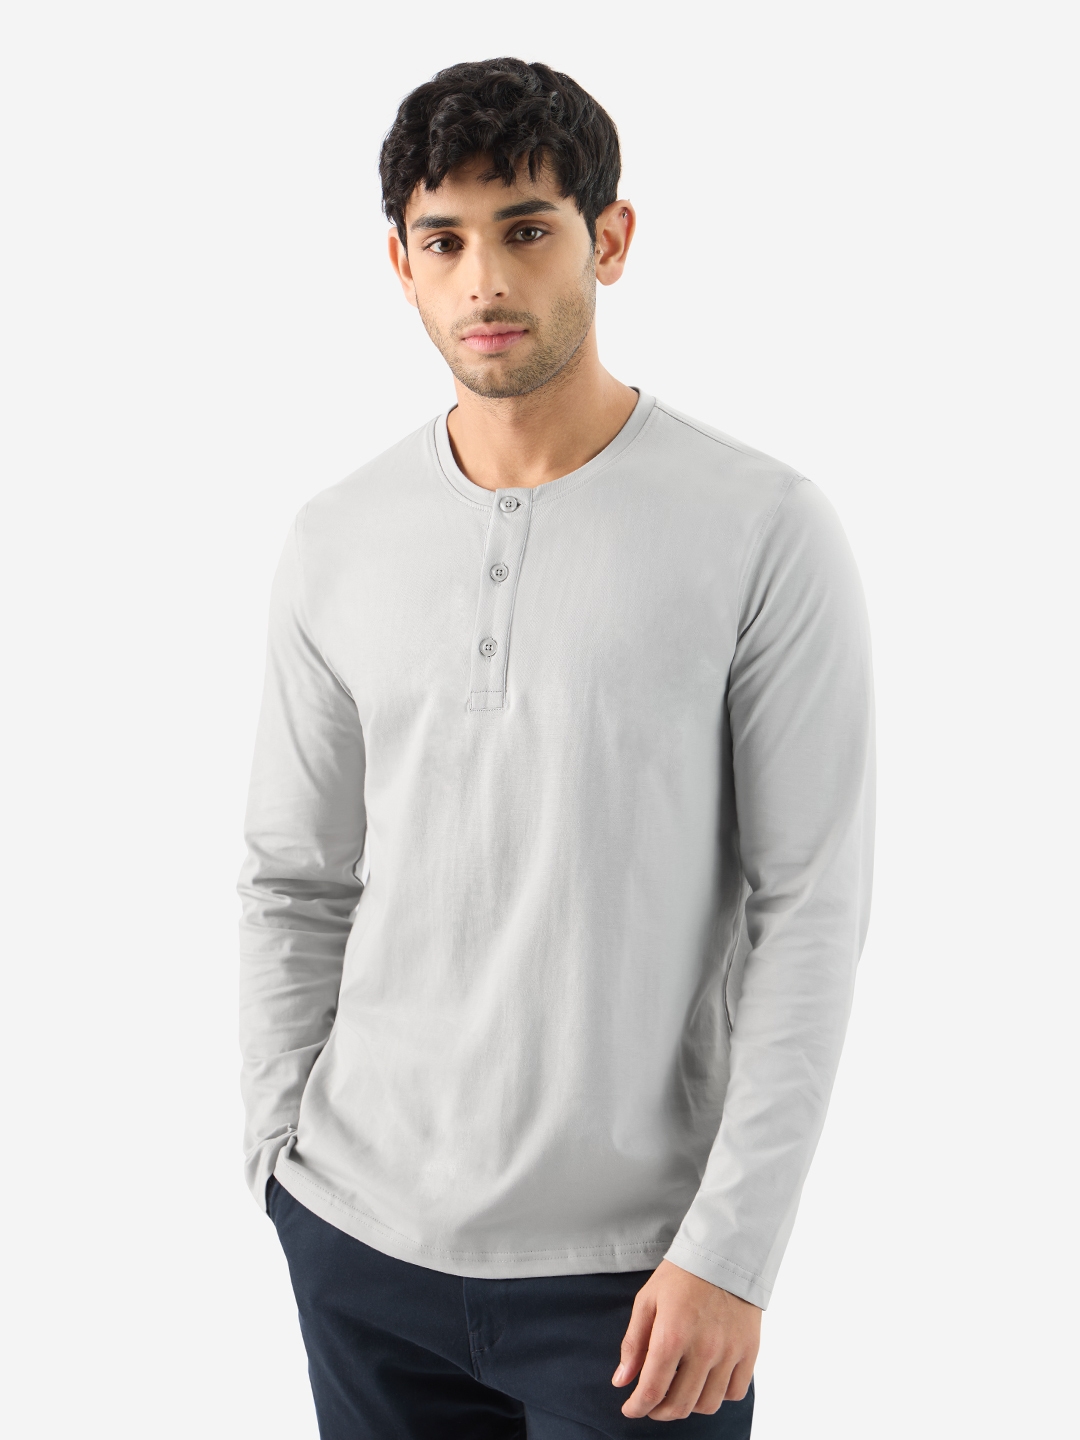 The Souled Store | Men's Solids: Light Grey Henley T-Shirt